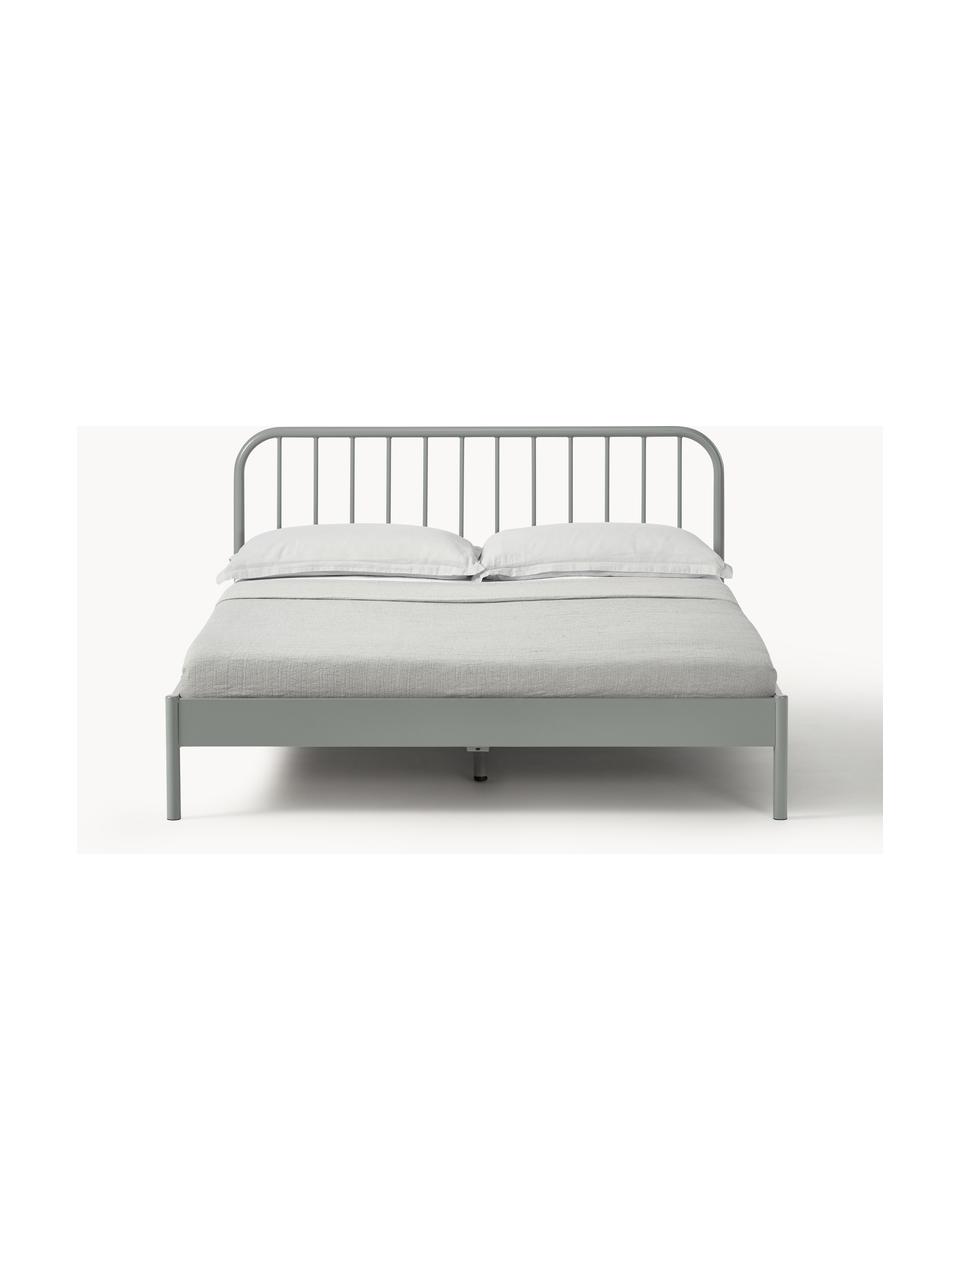 Kovová postel Sanna, Kov s práškovým nástřikem, Šedozelená, Š 140 cm, D 200 cm